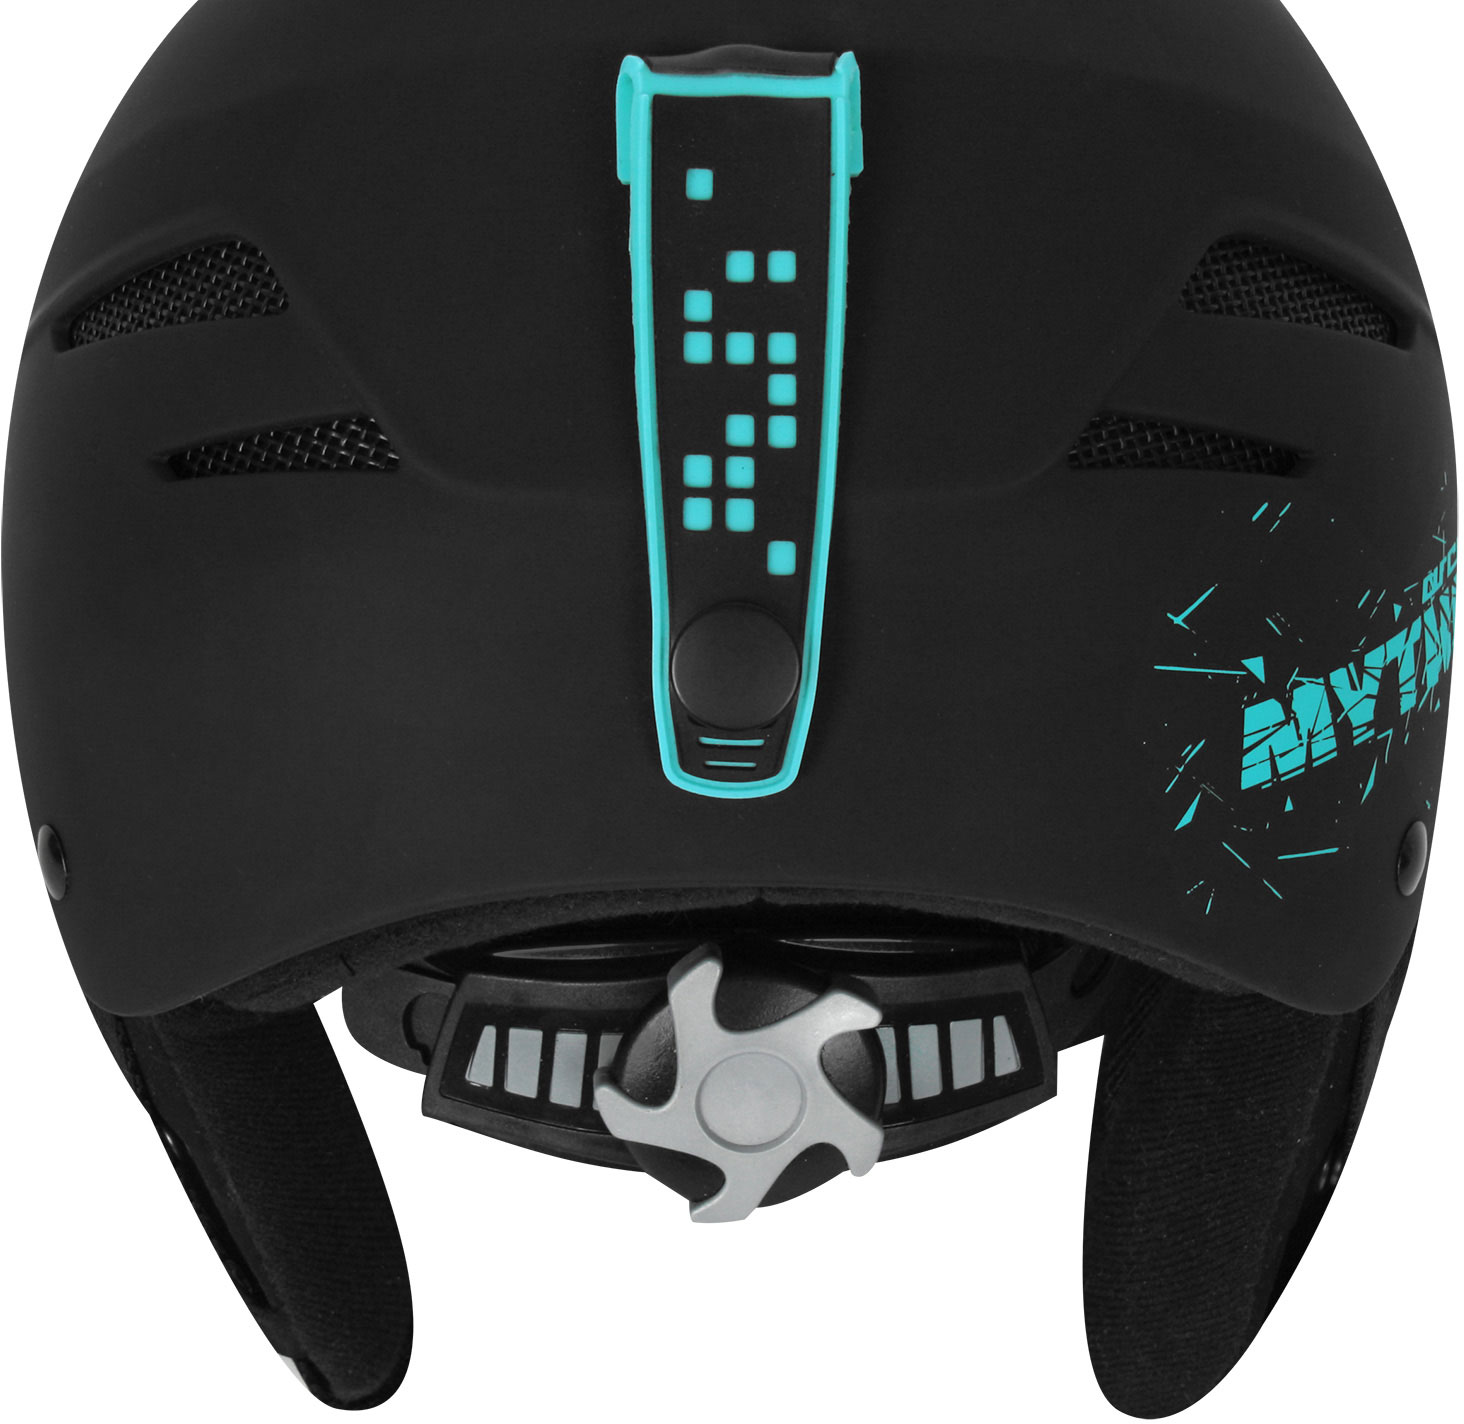 Boys’ snowboard helmet